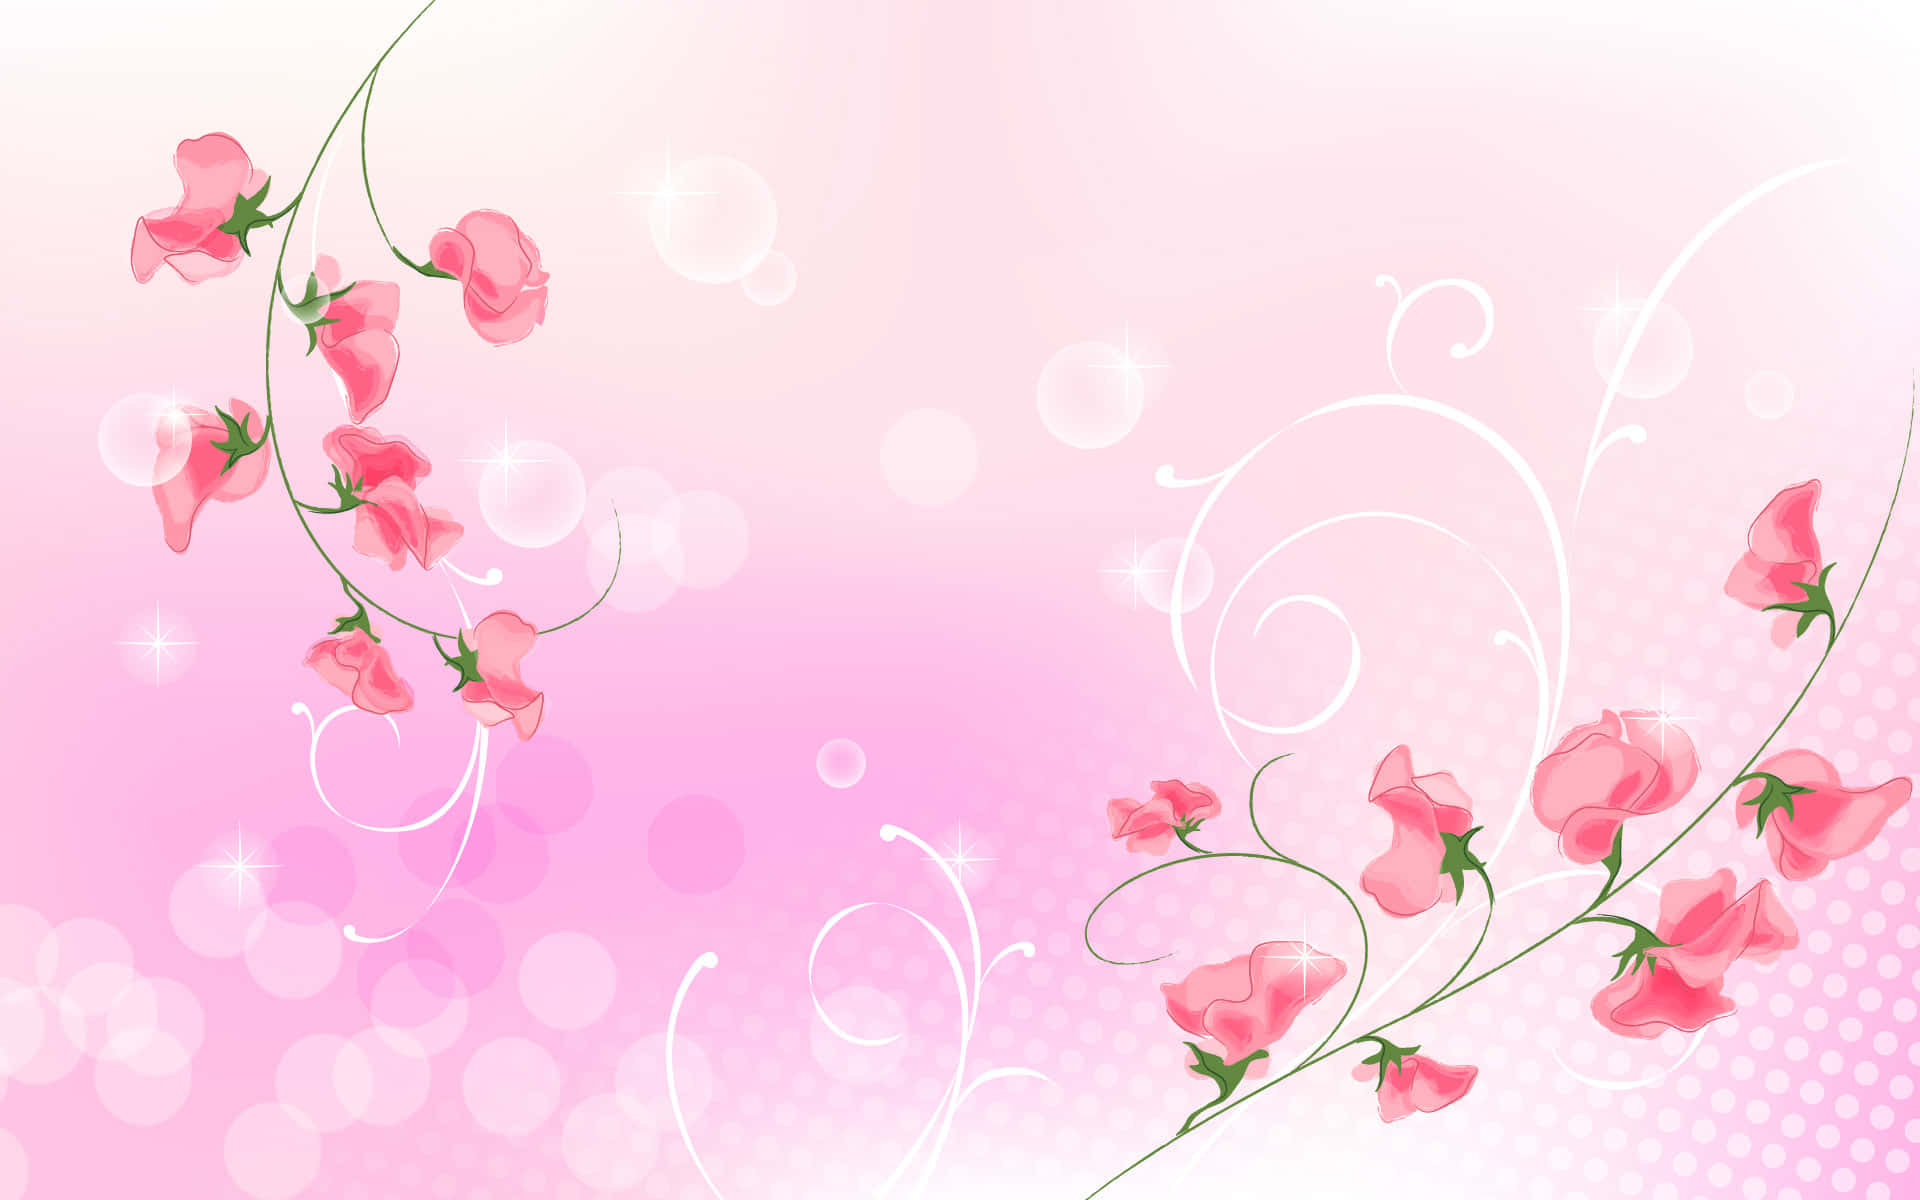 Pink Flowers on Light Pink Background Desktop Wallpaper - Fresh and  Feminine Design Stock Illustration - Illustration of petal, branch:  274764968